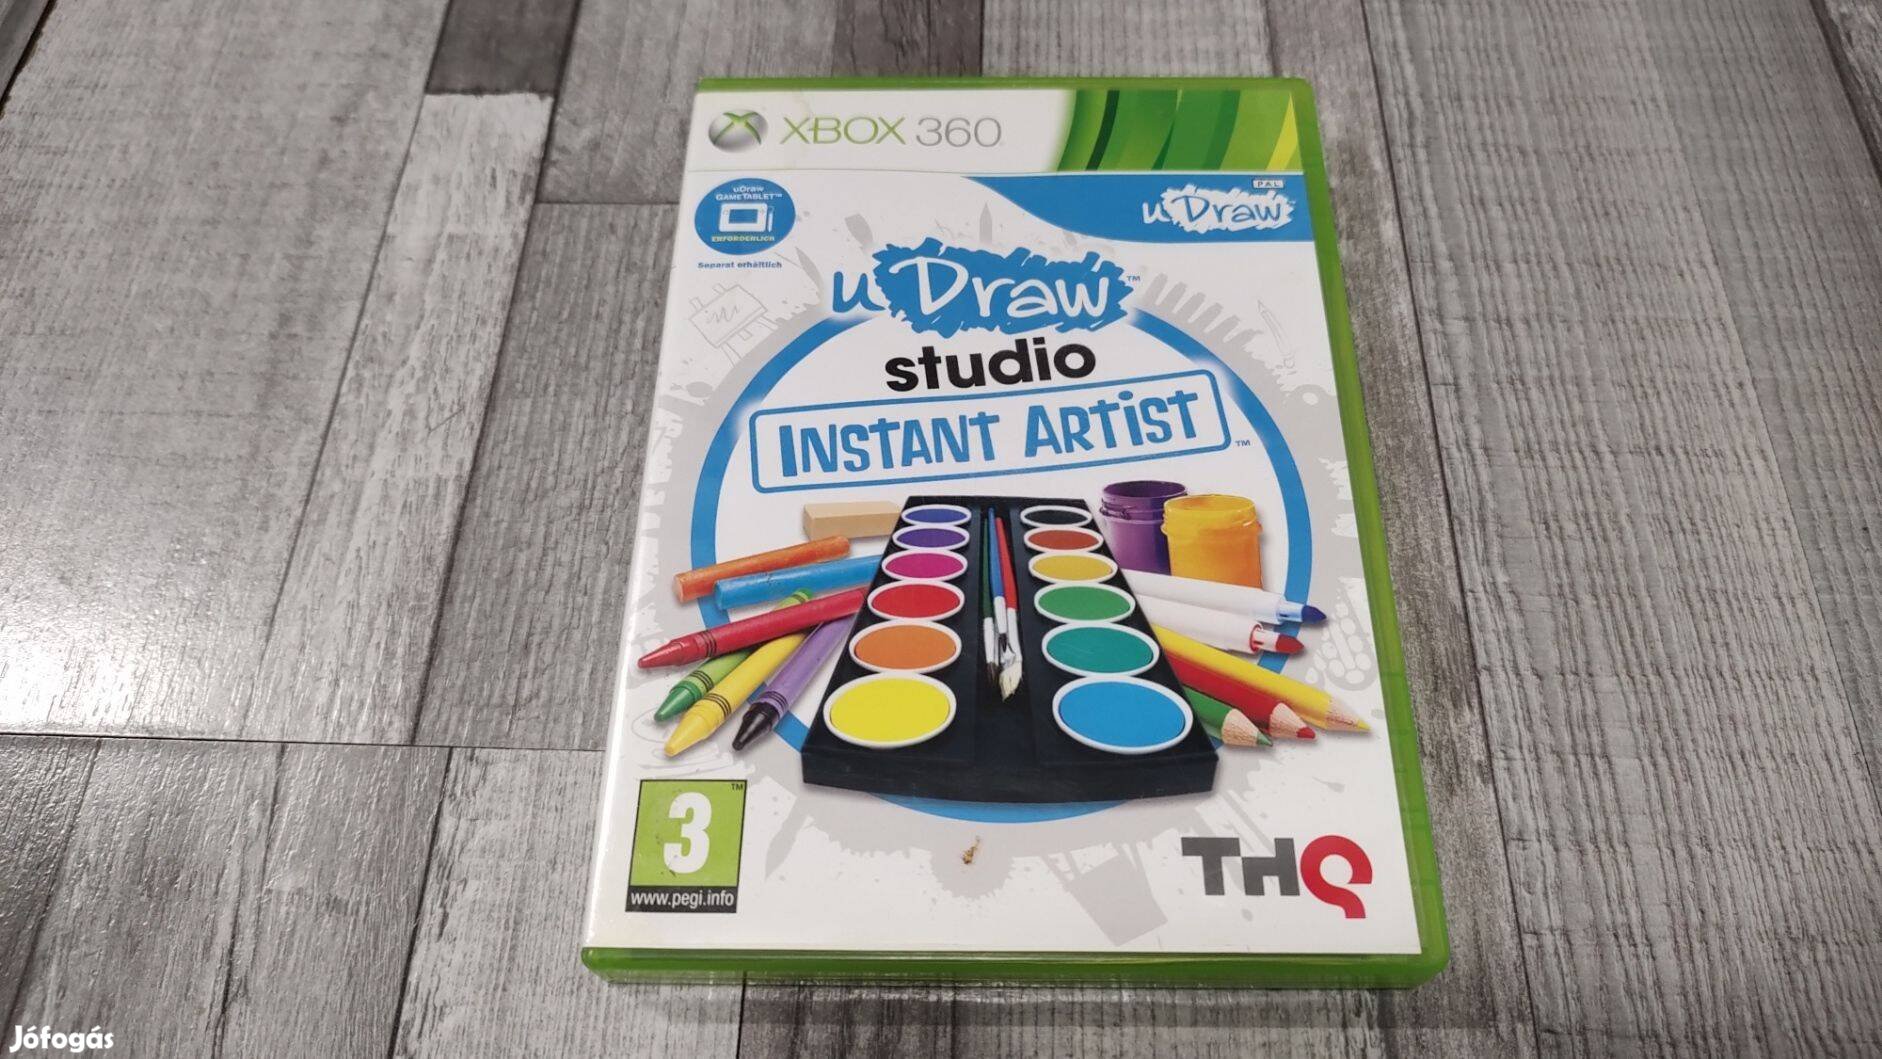 Top Xbox 360 : U Draw Studio Instant Artist